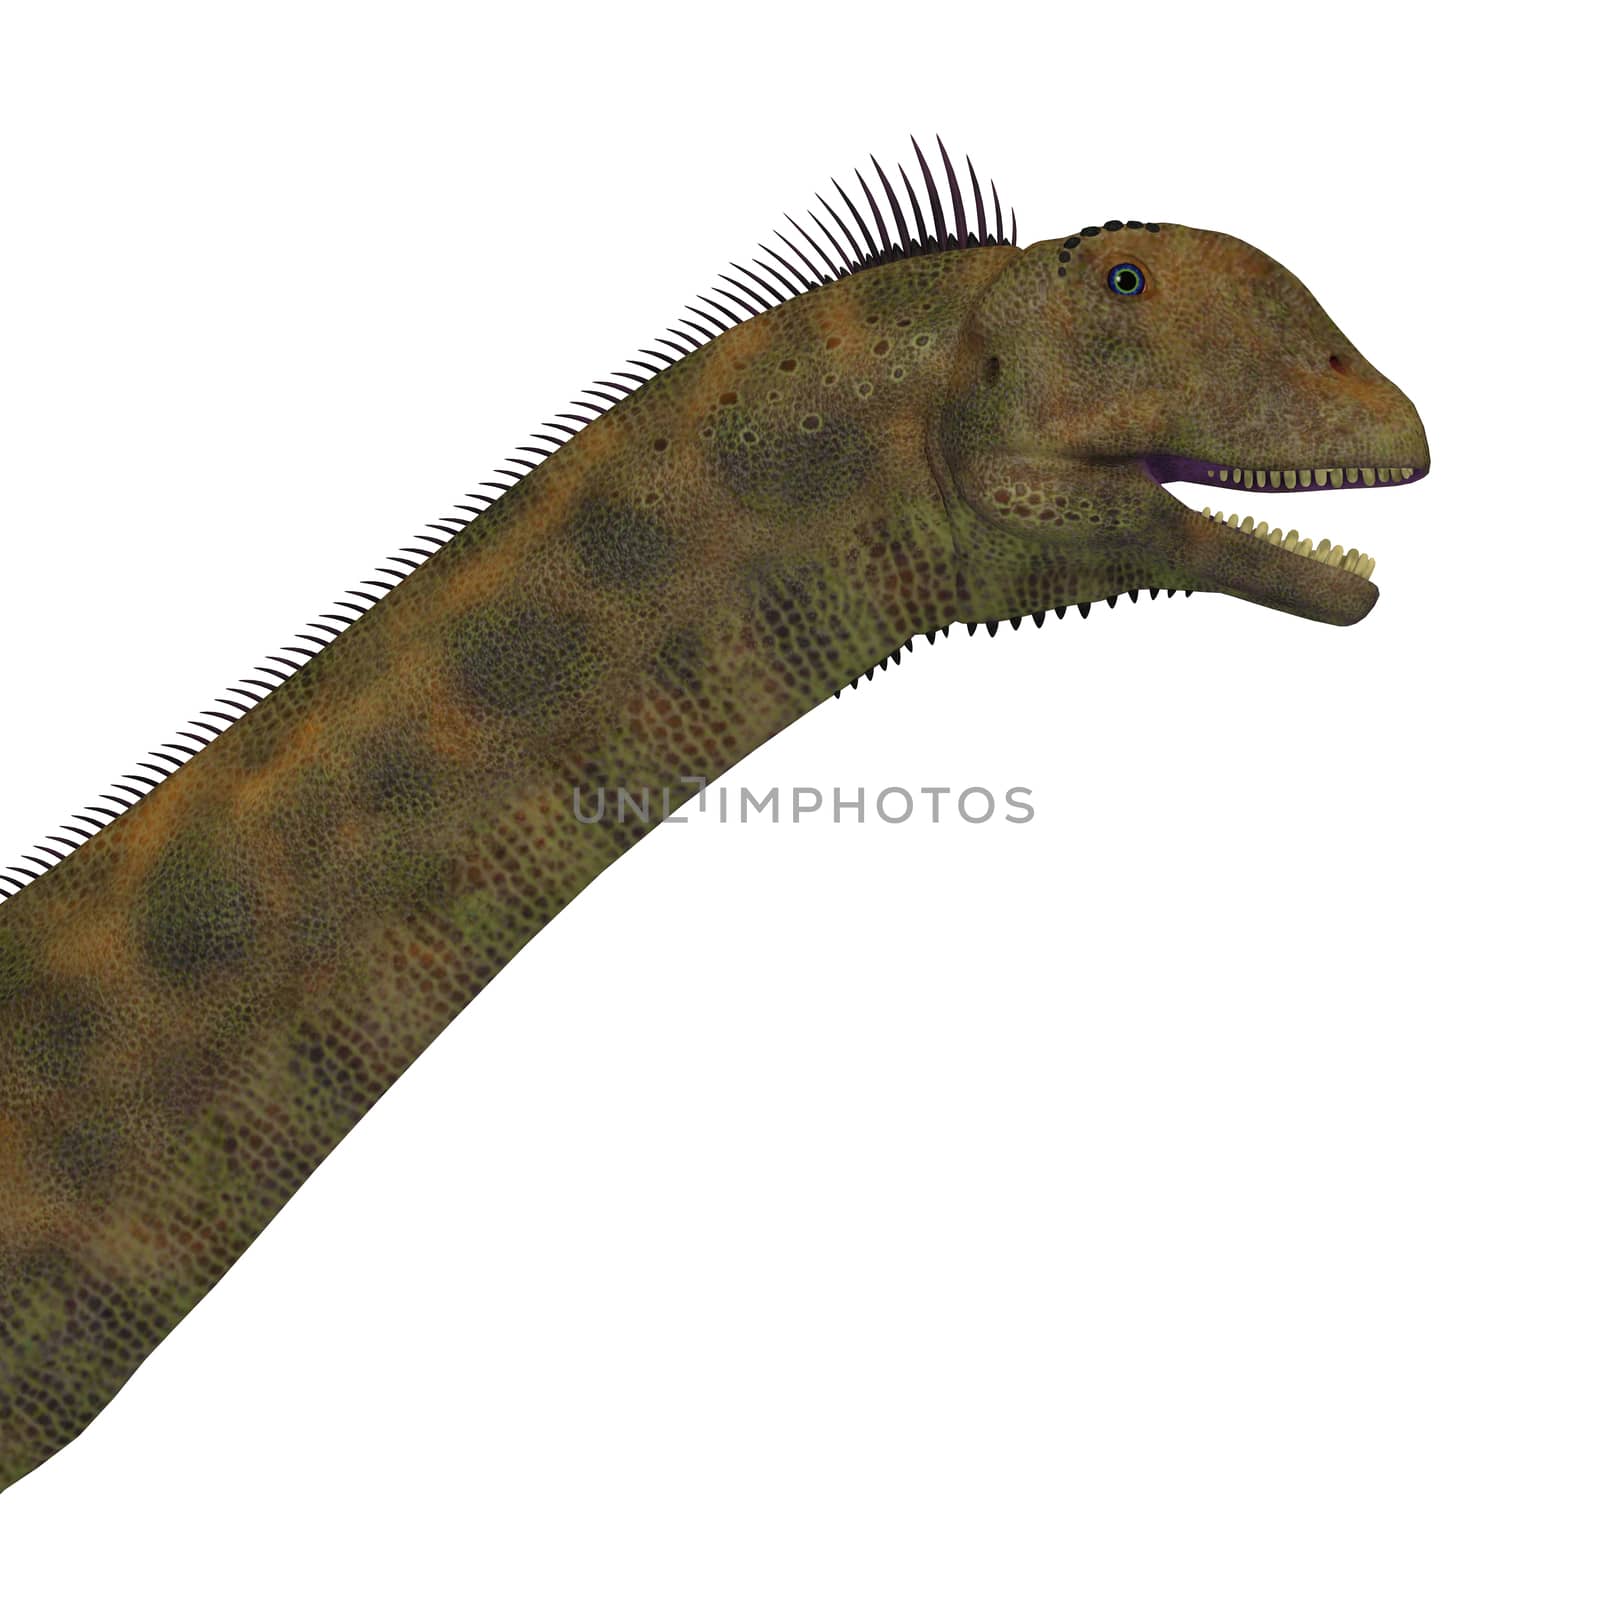 Atlasaurus Dinosaur Head by Catmando